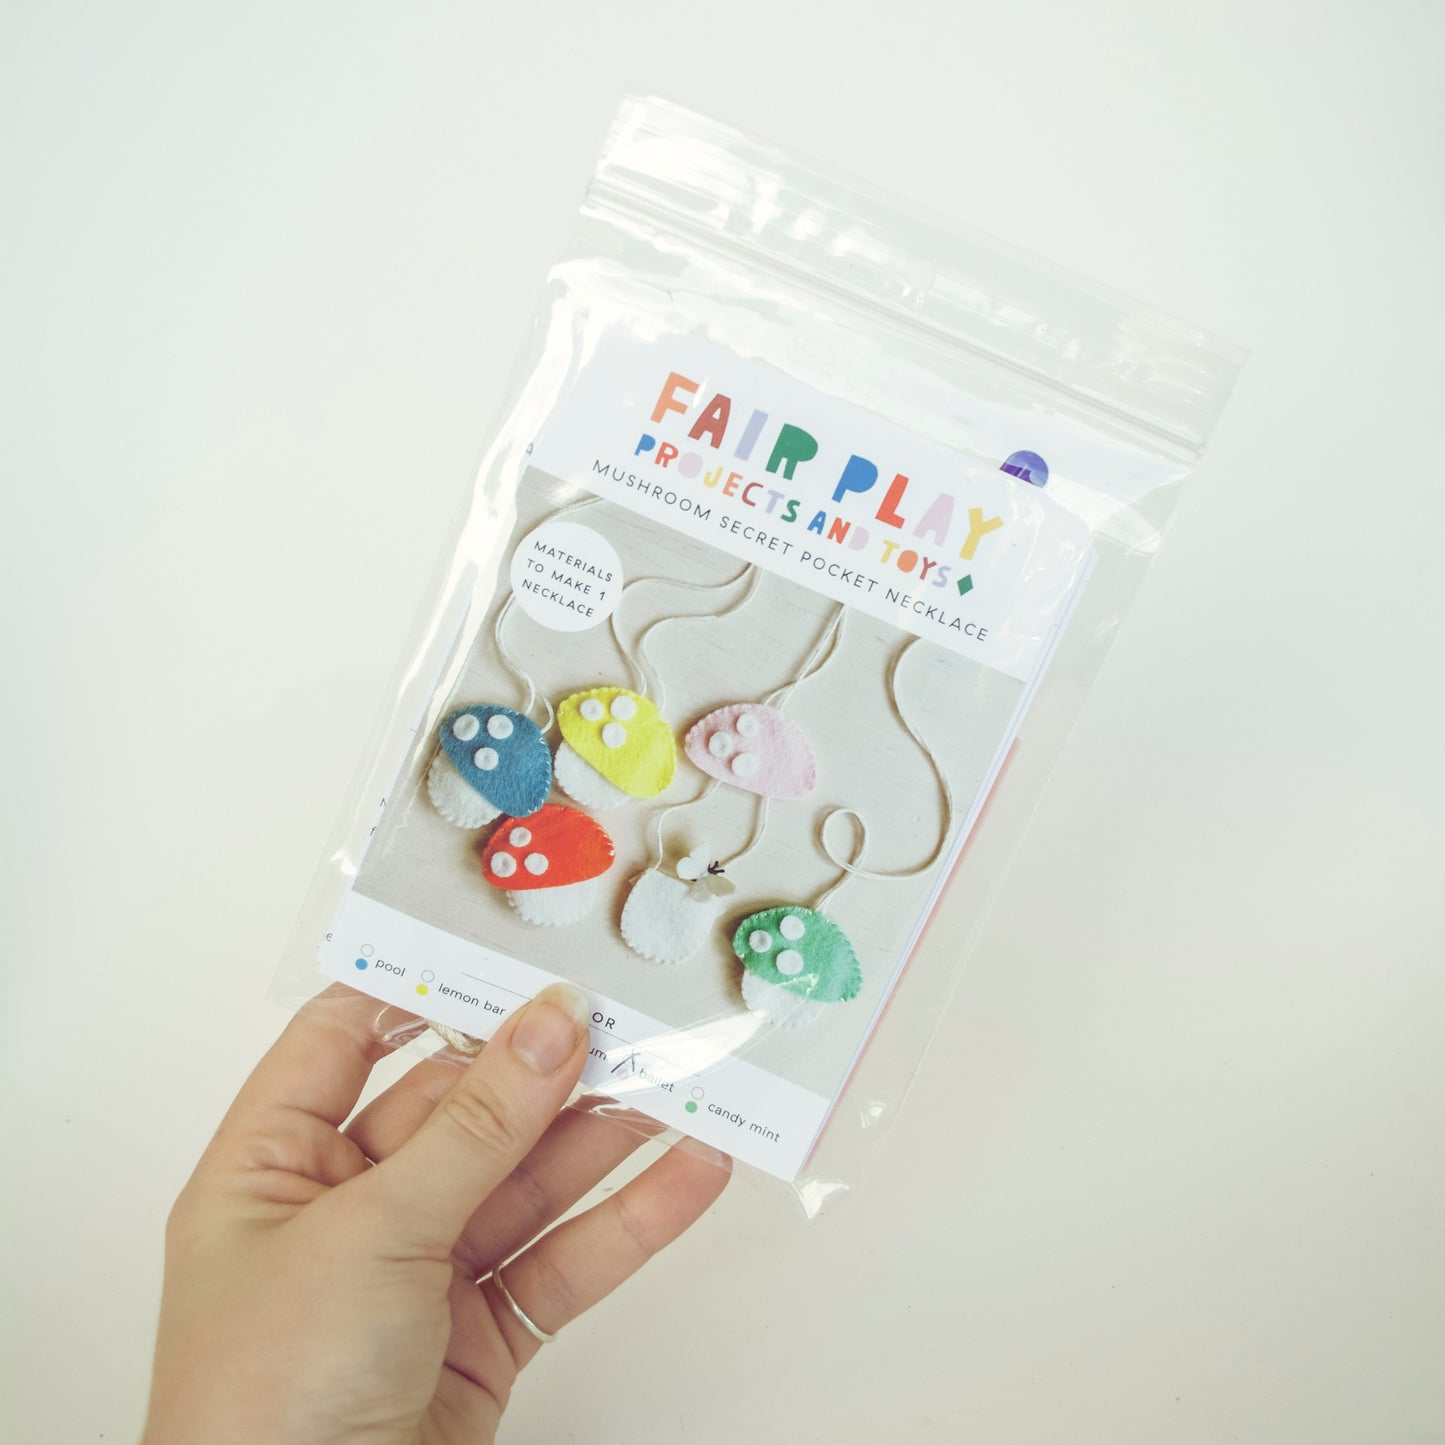 Mushroom Secret Pocket Necklace Kit